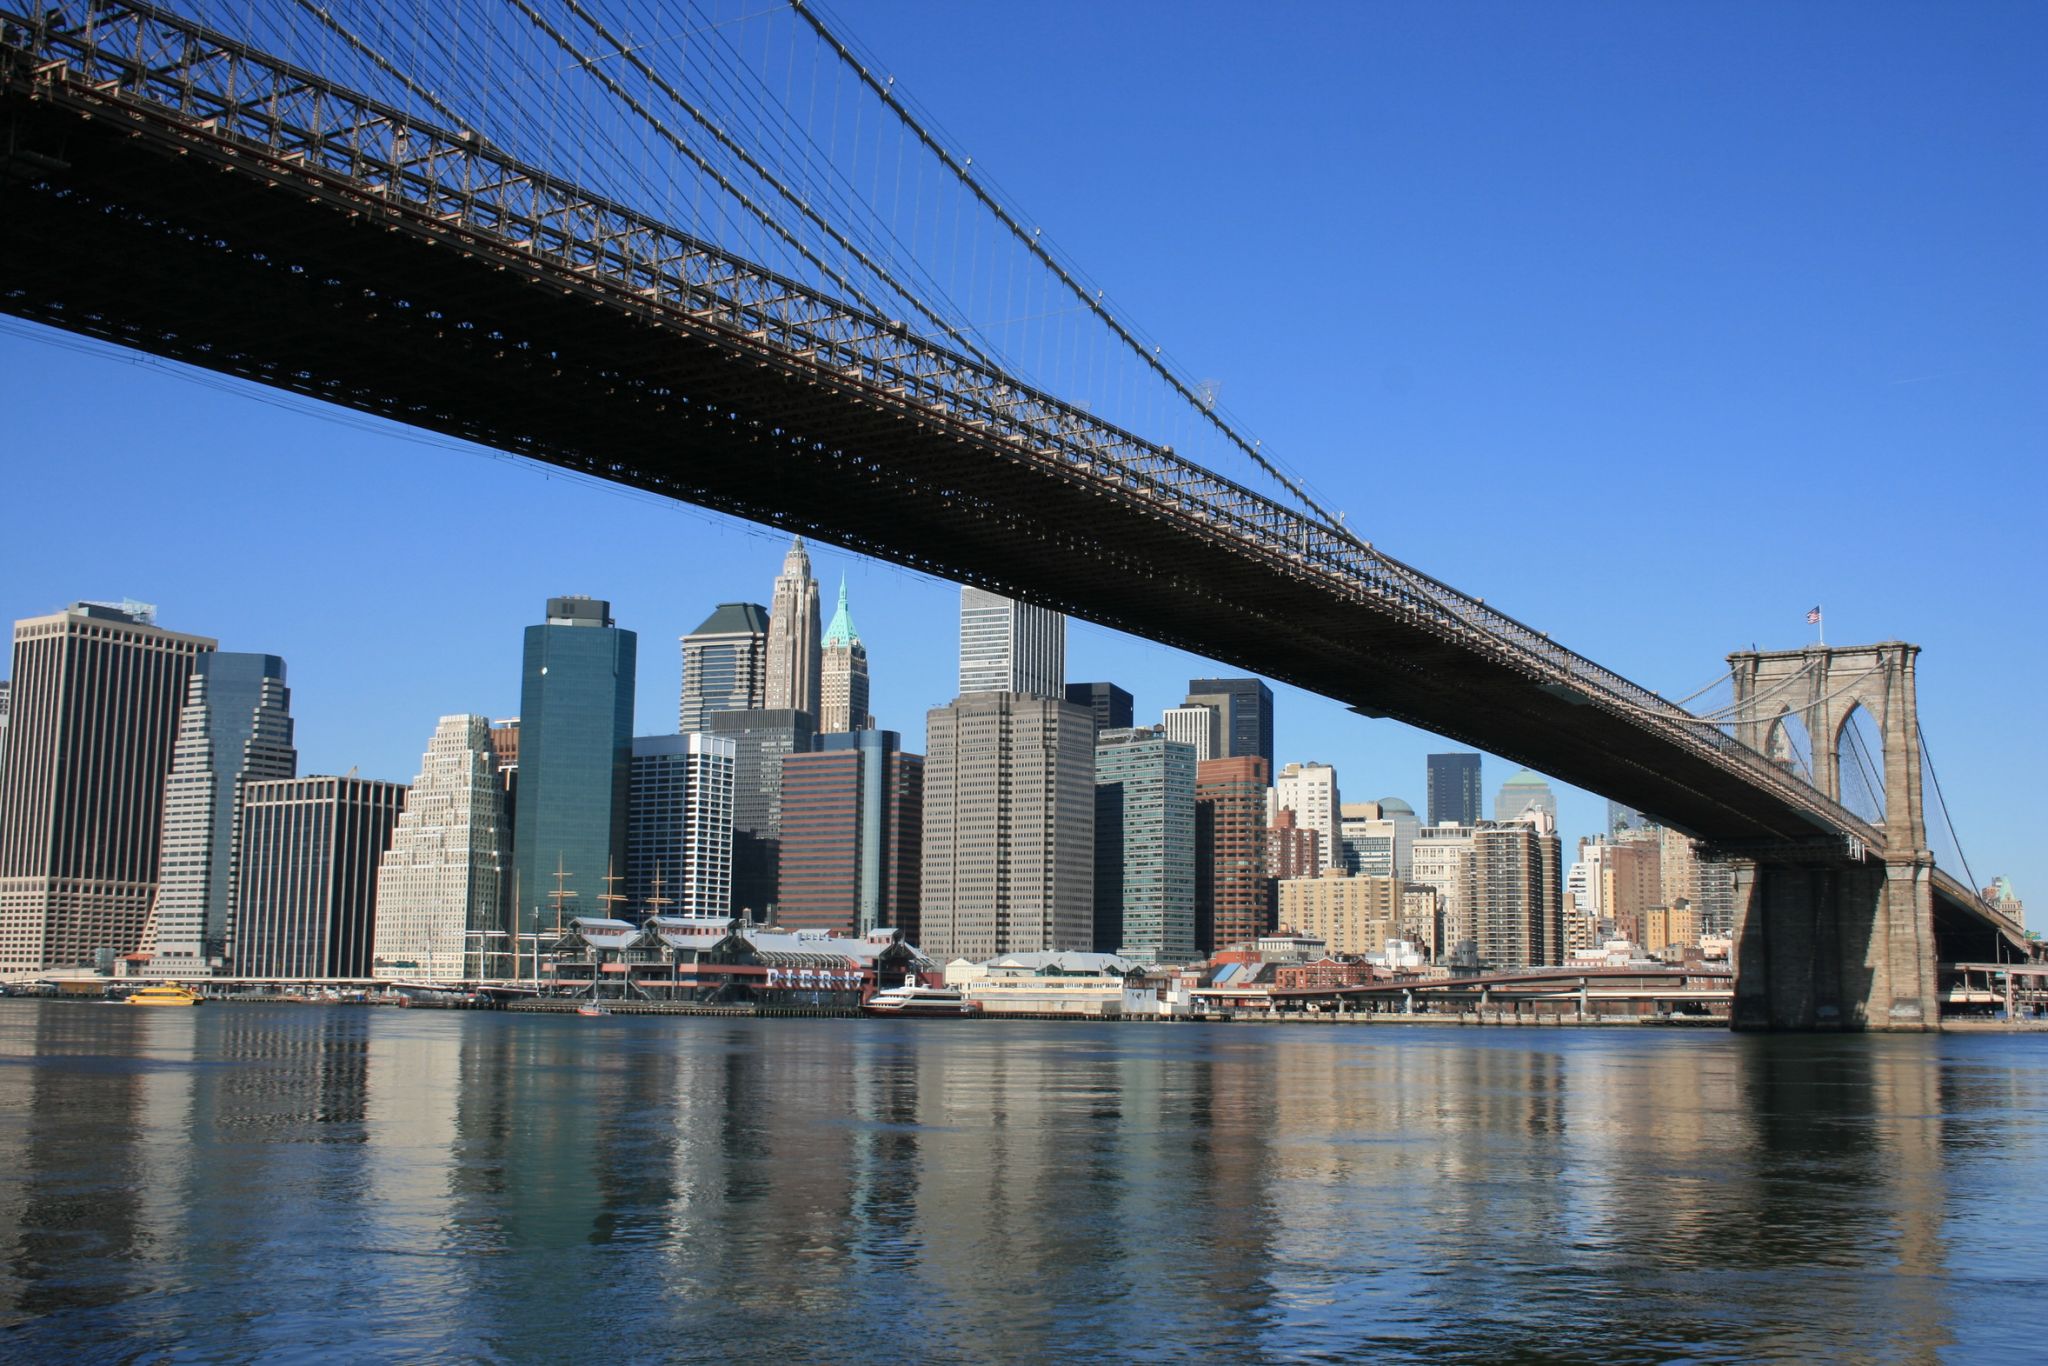 vue de Manhattan depuis le pont de Brooklyn, New York, États-Unis